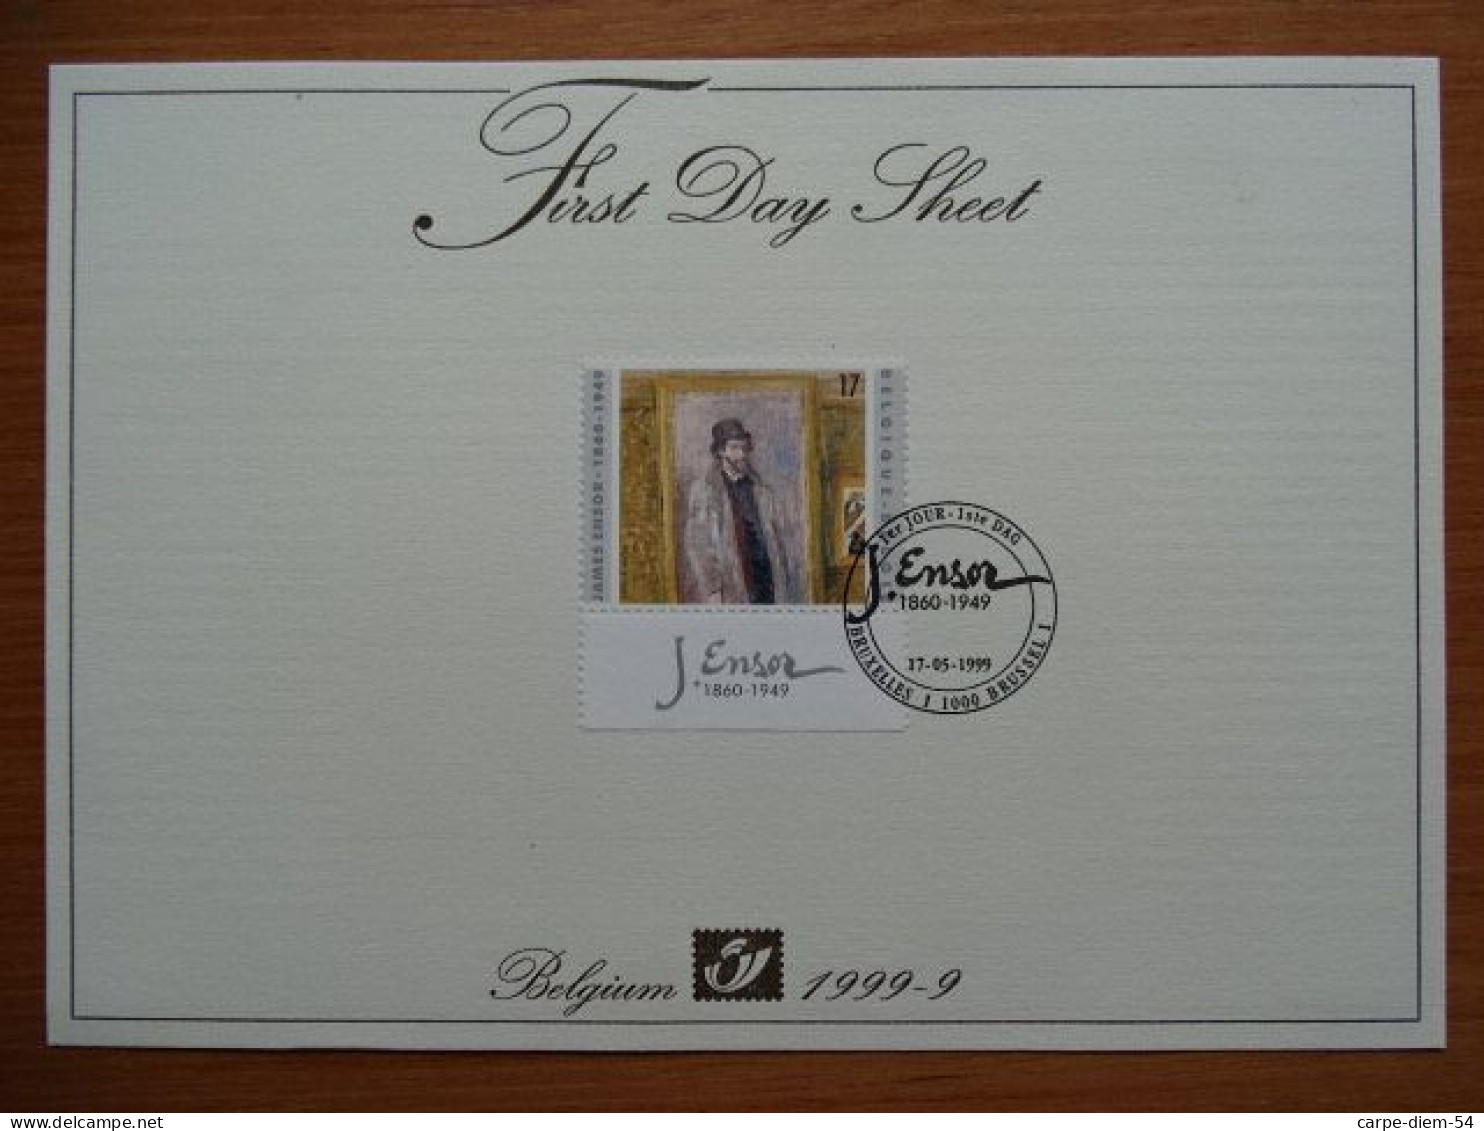 Belgique & Israel - First Day Sheet + Enveloppe FDC + 2 Timbres Non Oblitérés - James Ensor - 1999 - Deluxe Sheetlets [LX]